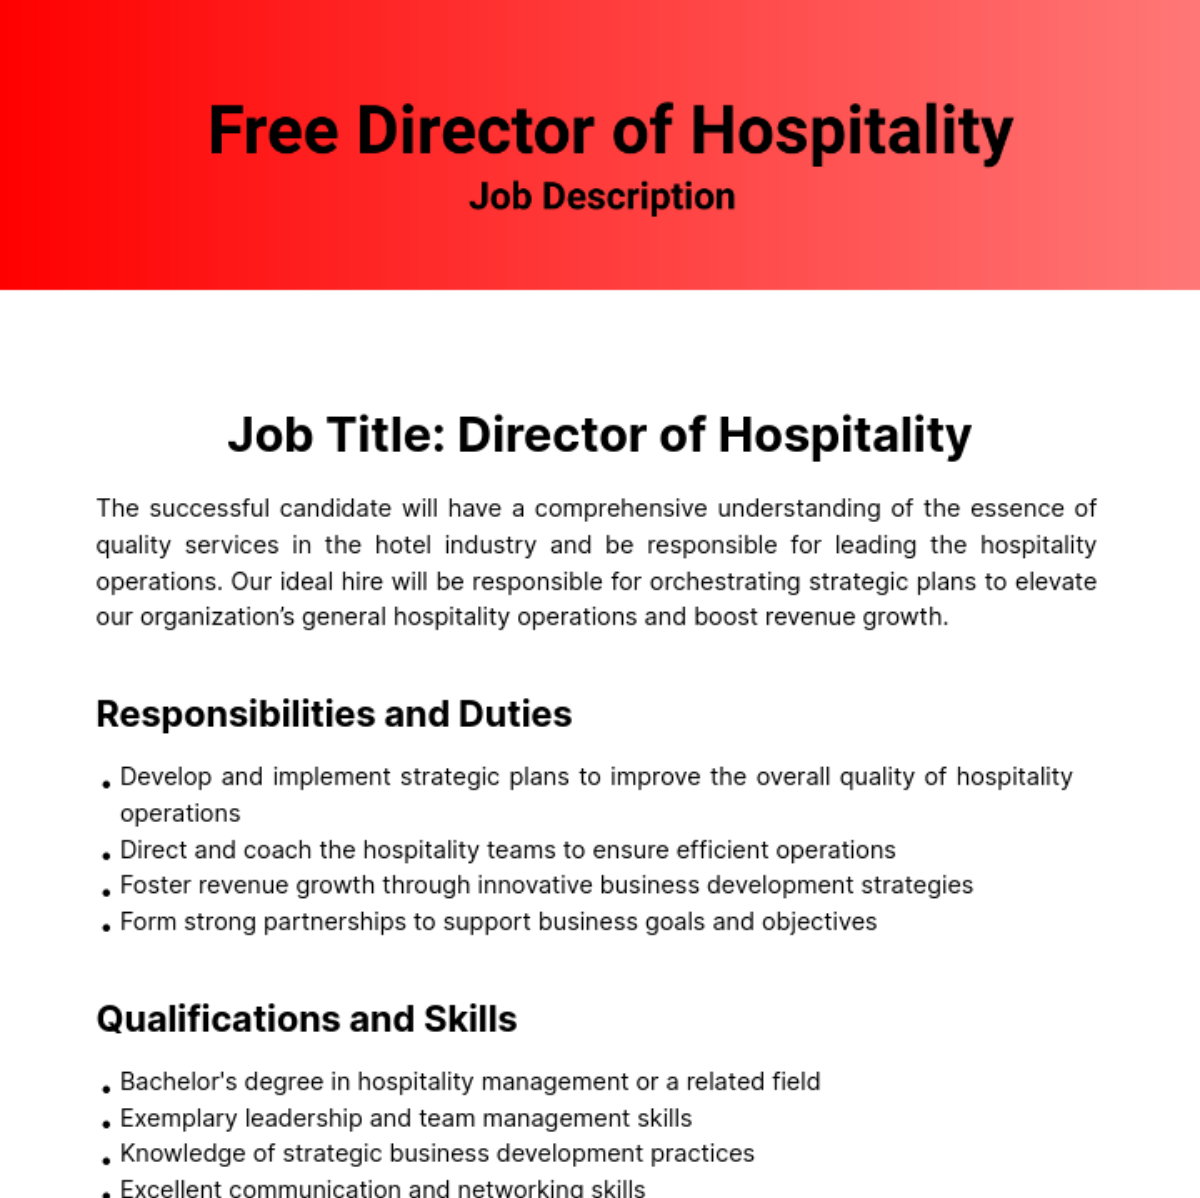 Free Director of Hospitality Job Description Template